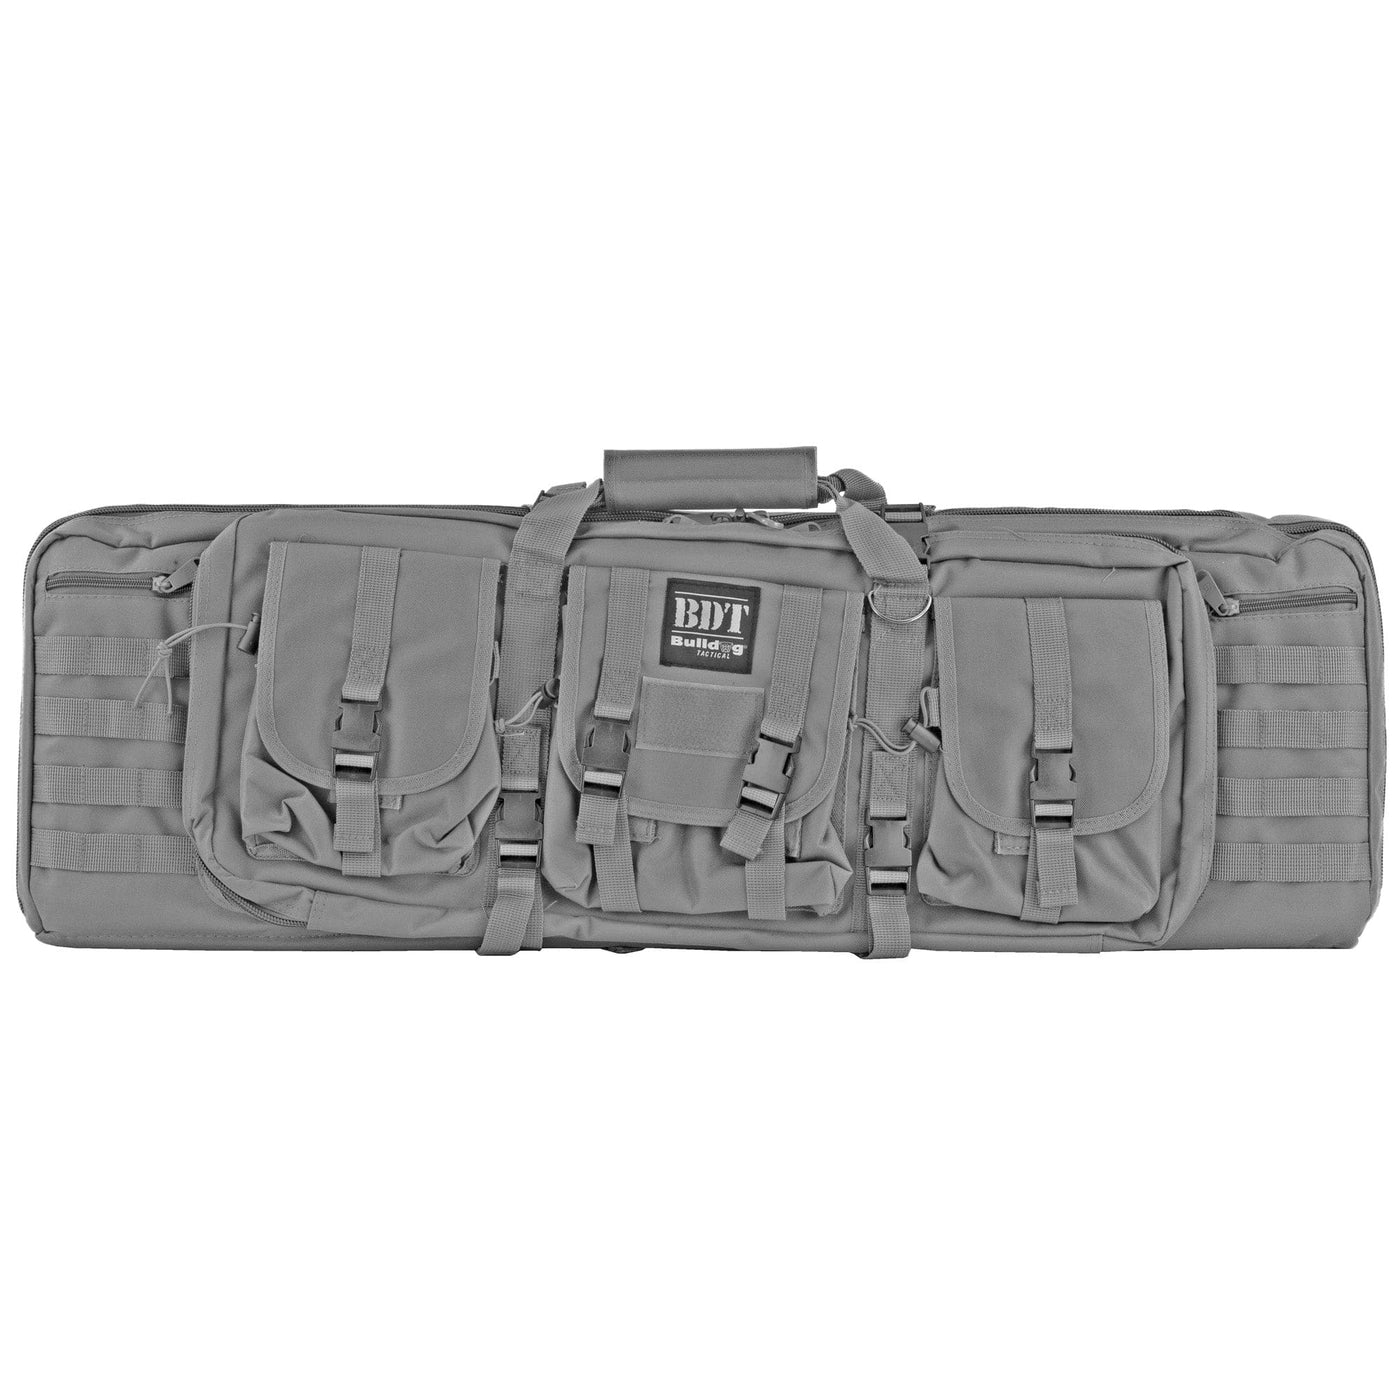 Bulldog Bulldog 37" 2 Gun Tactical Cse - 3 Large Accessory Pockets Grey Gray / 37" Firearm Accessories